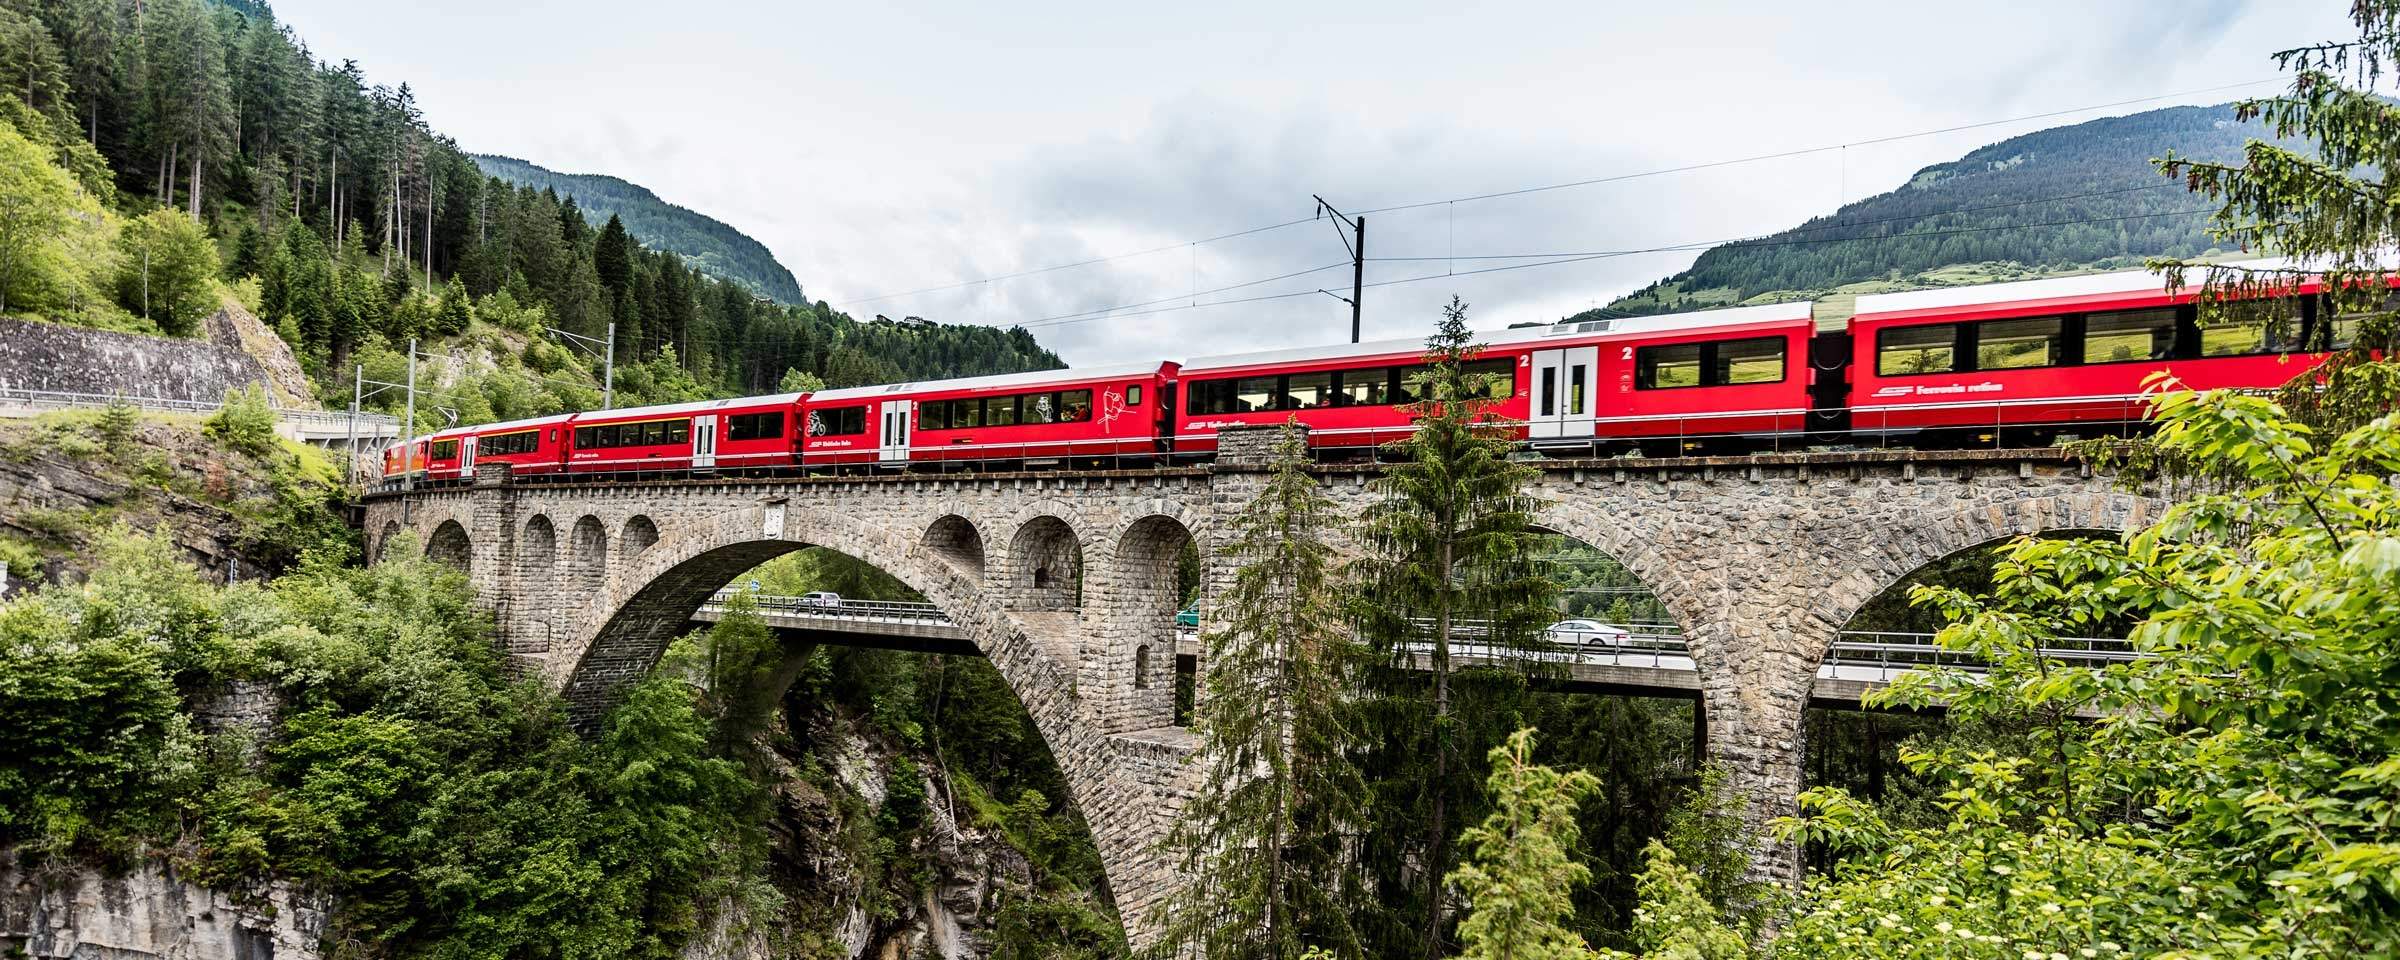 grand train tour of switzerland klassiker